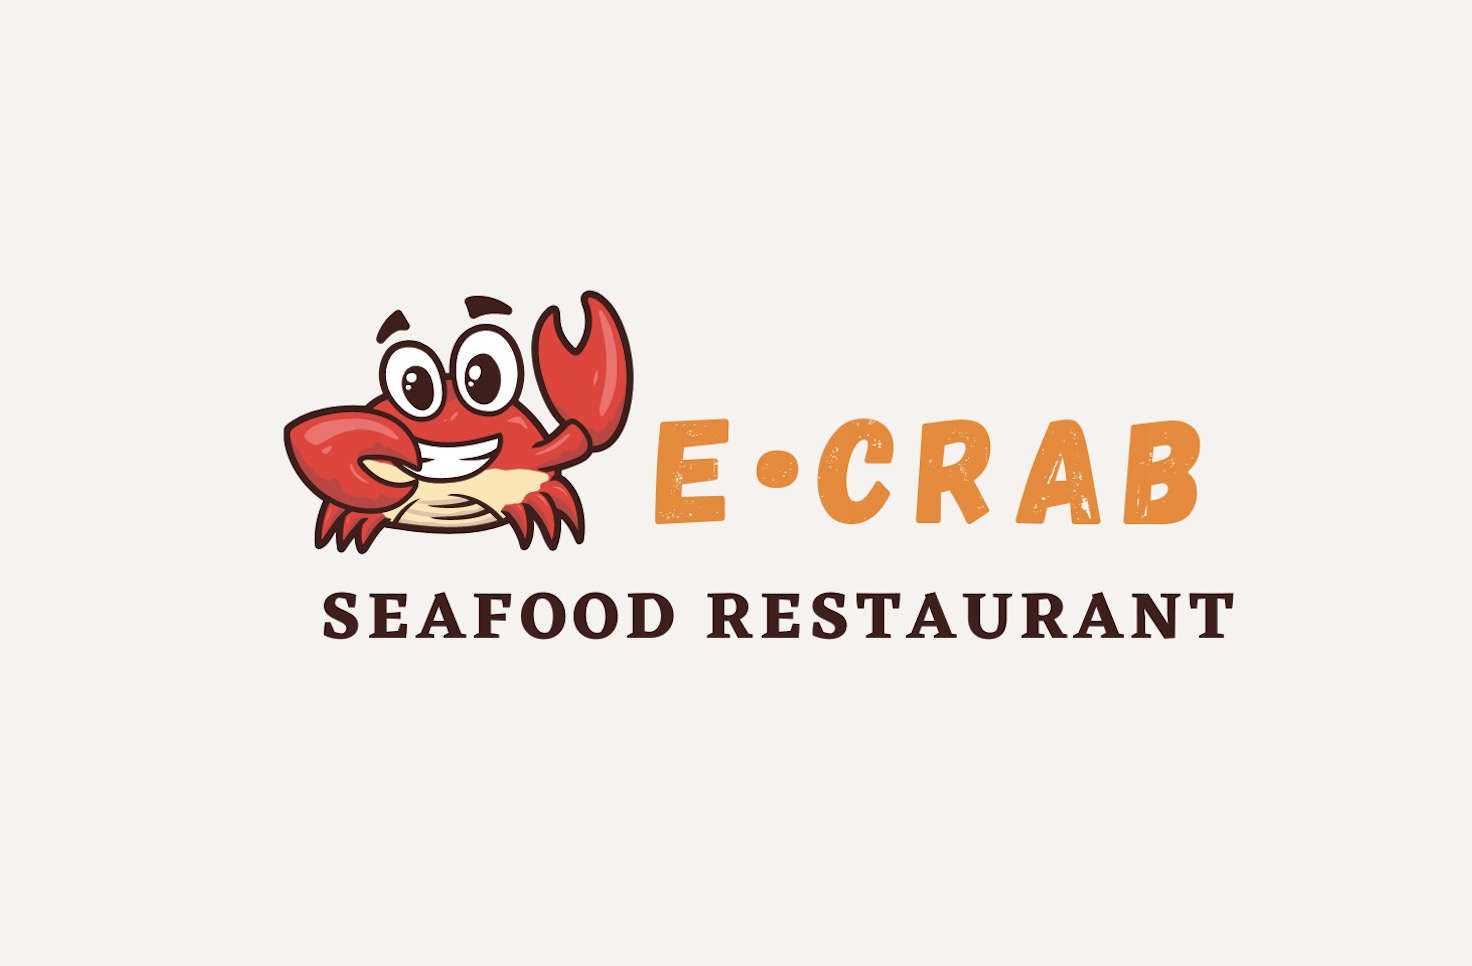 Seafood Restaurant E-crab